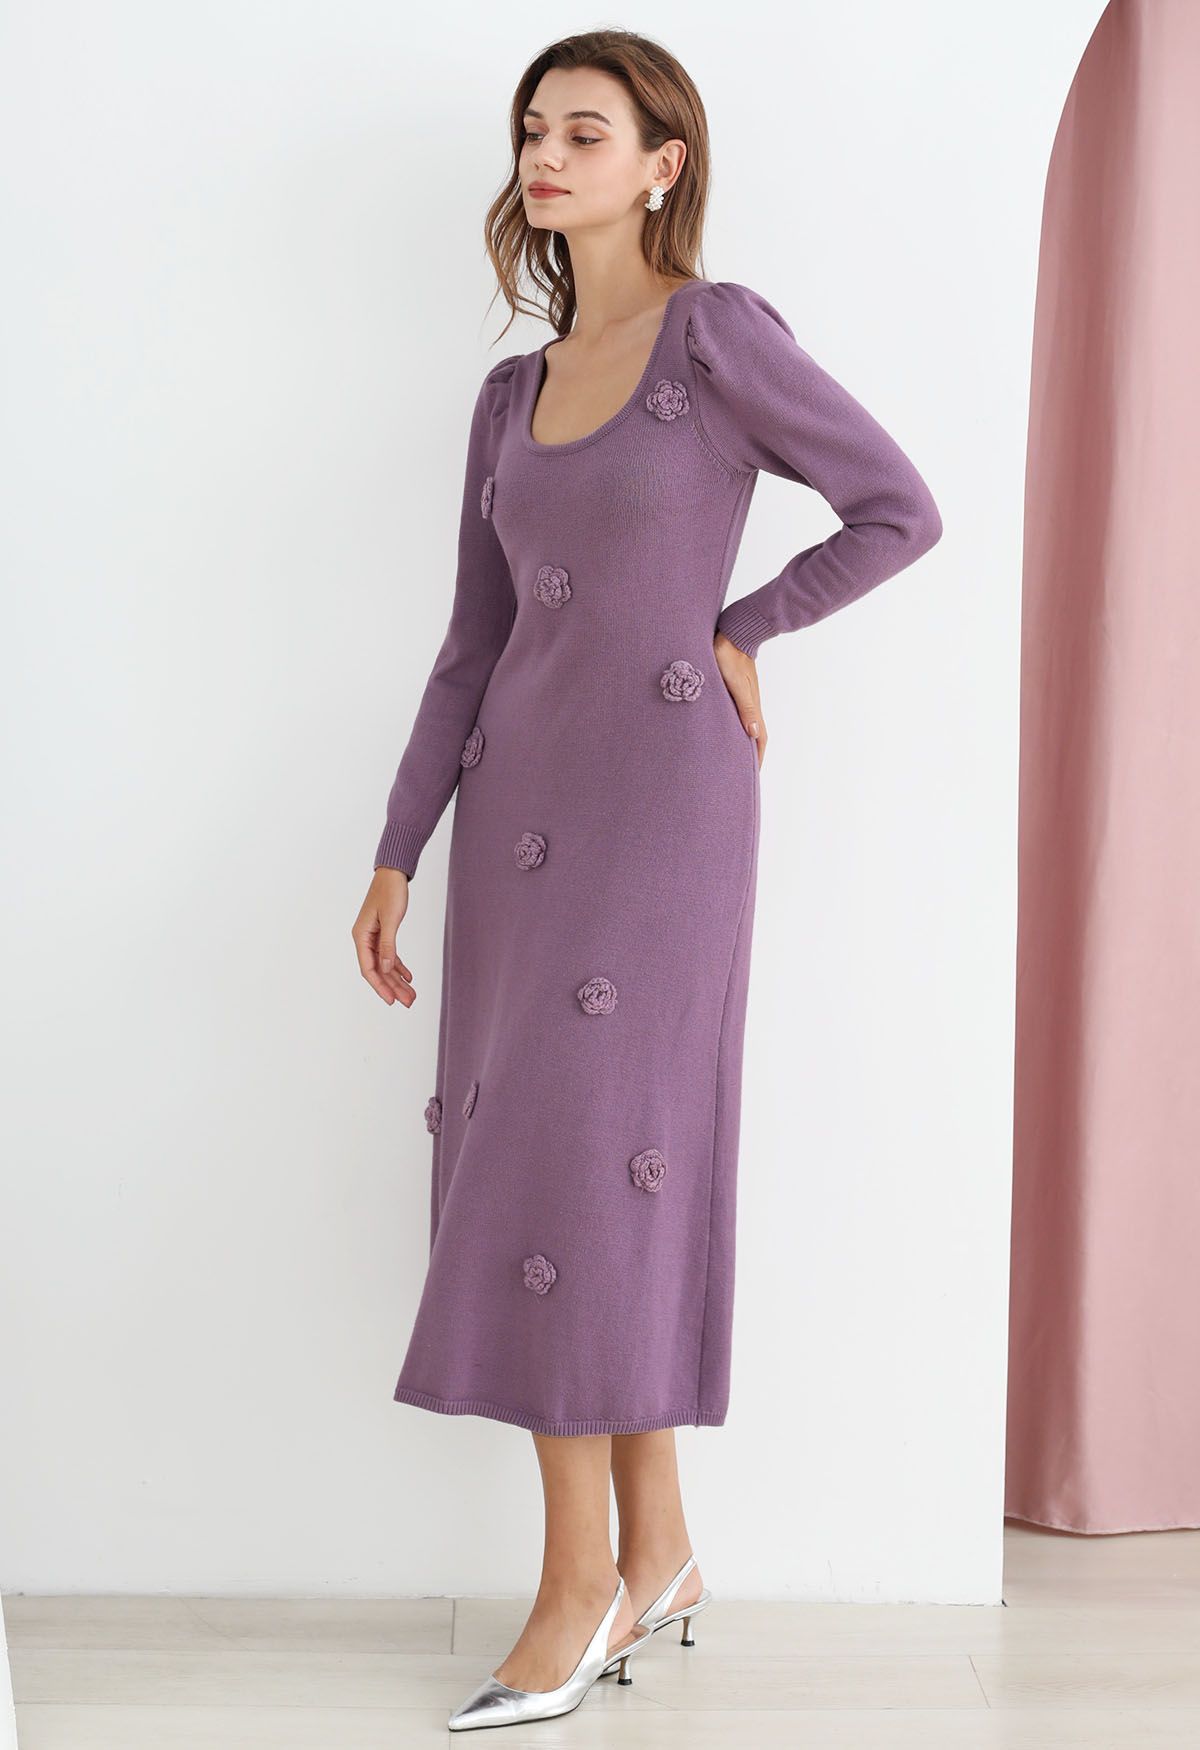 Scoop Neck Stitch Flower Knit Dress in Lilac